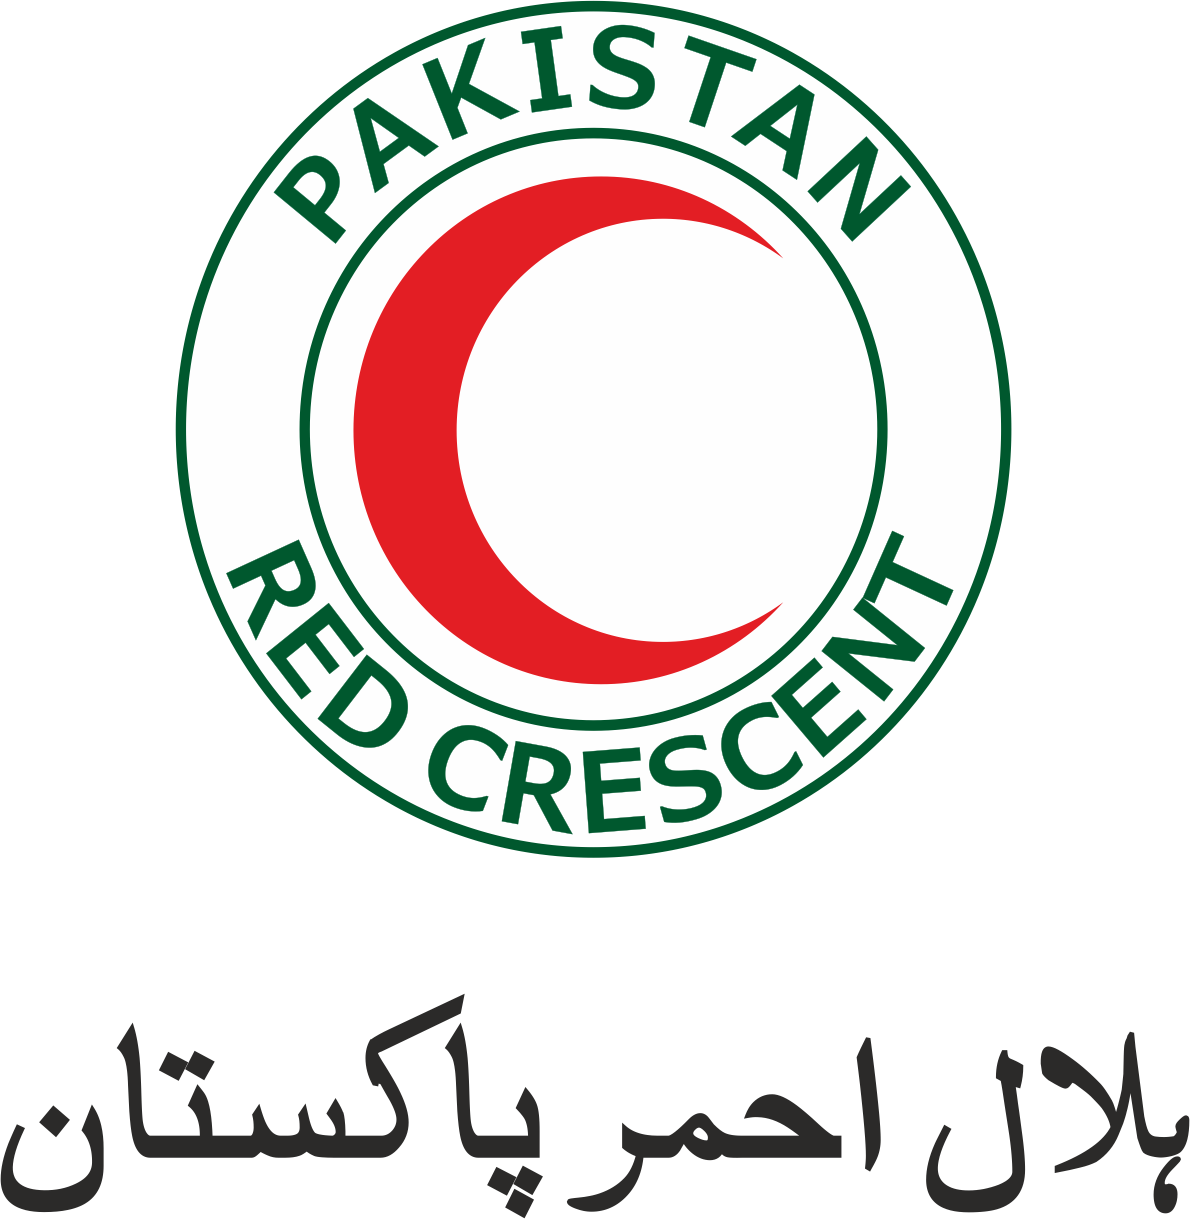 Pakistan Red Crescent Society – Khyber Pakhtunkhwa Branch